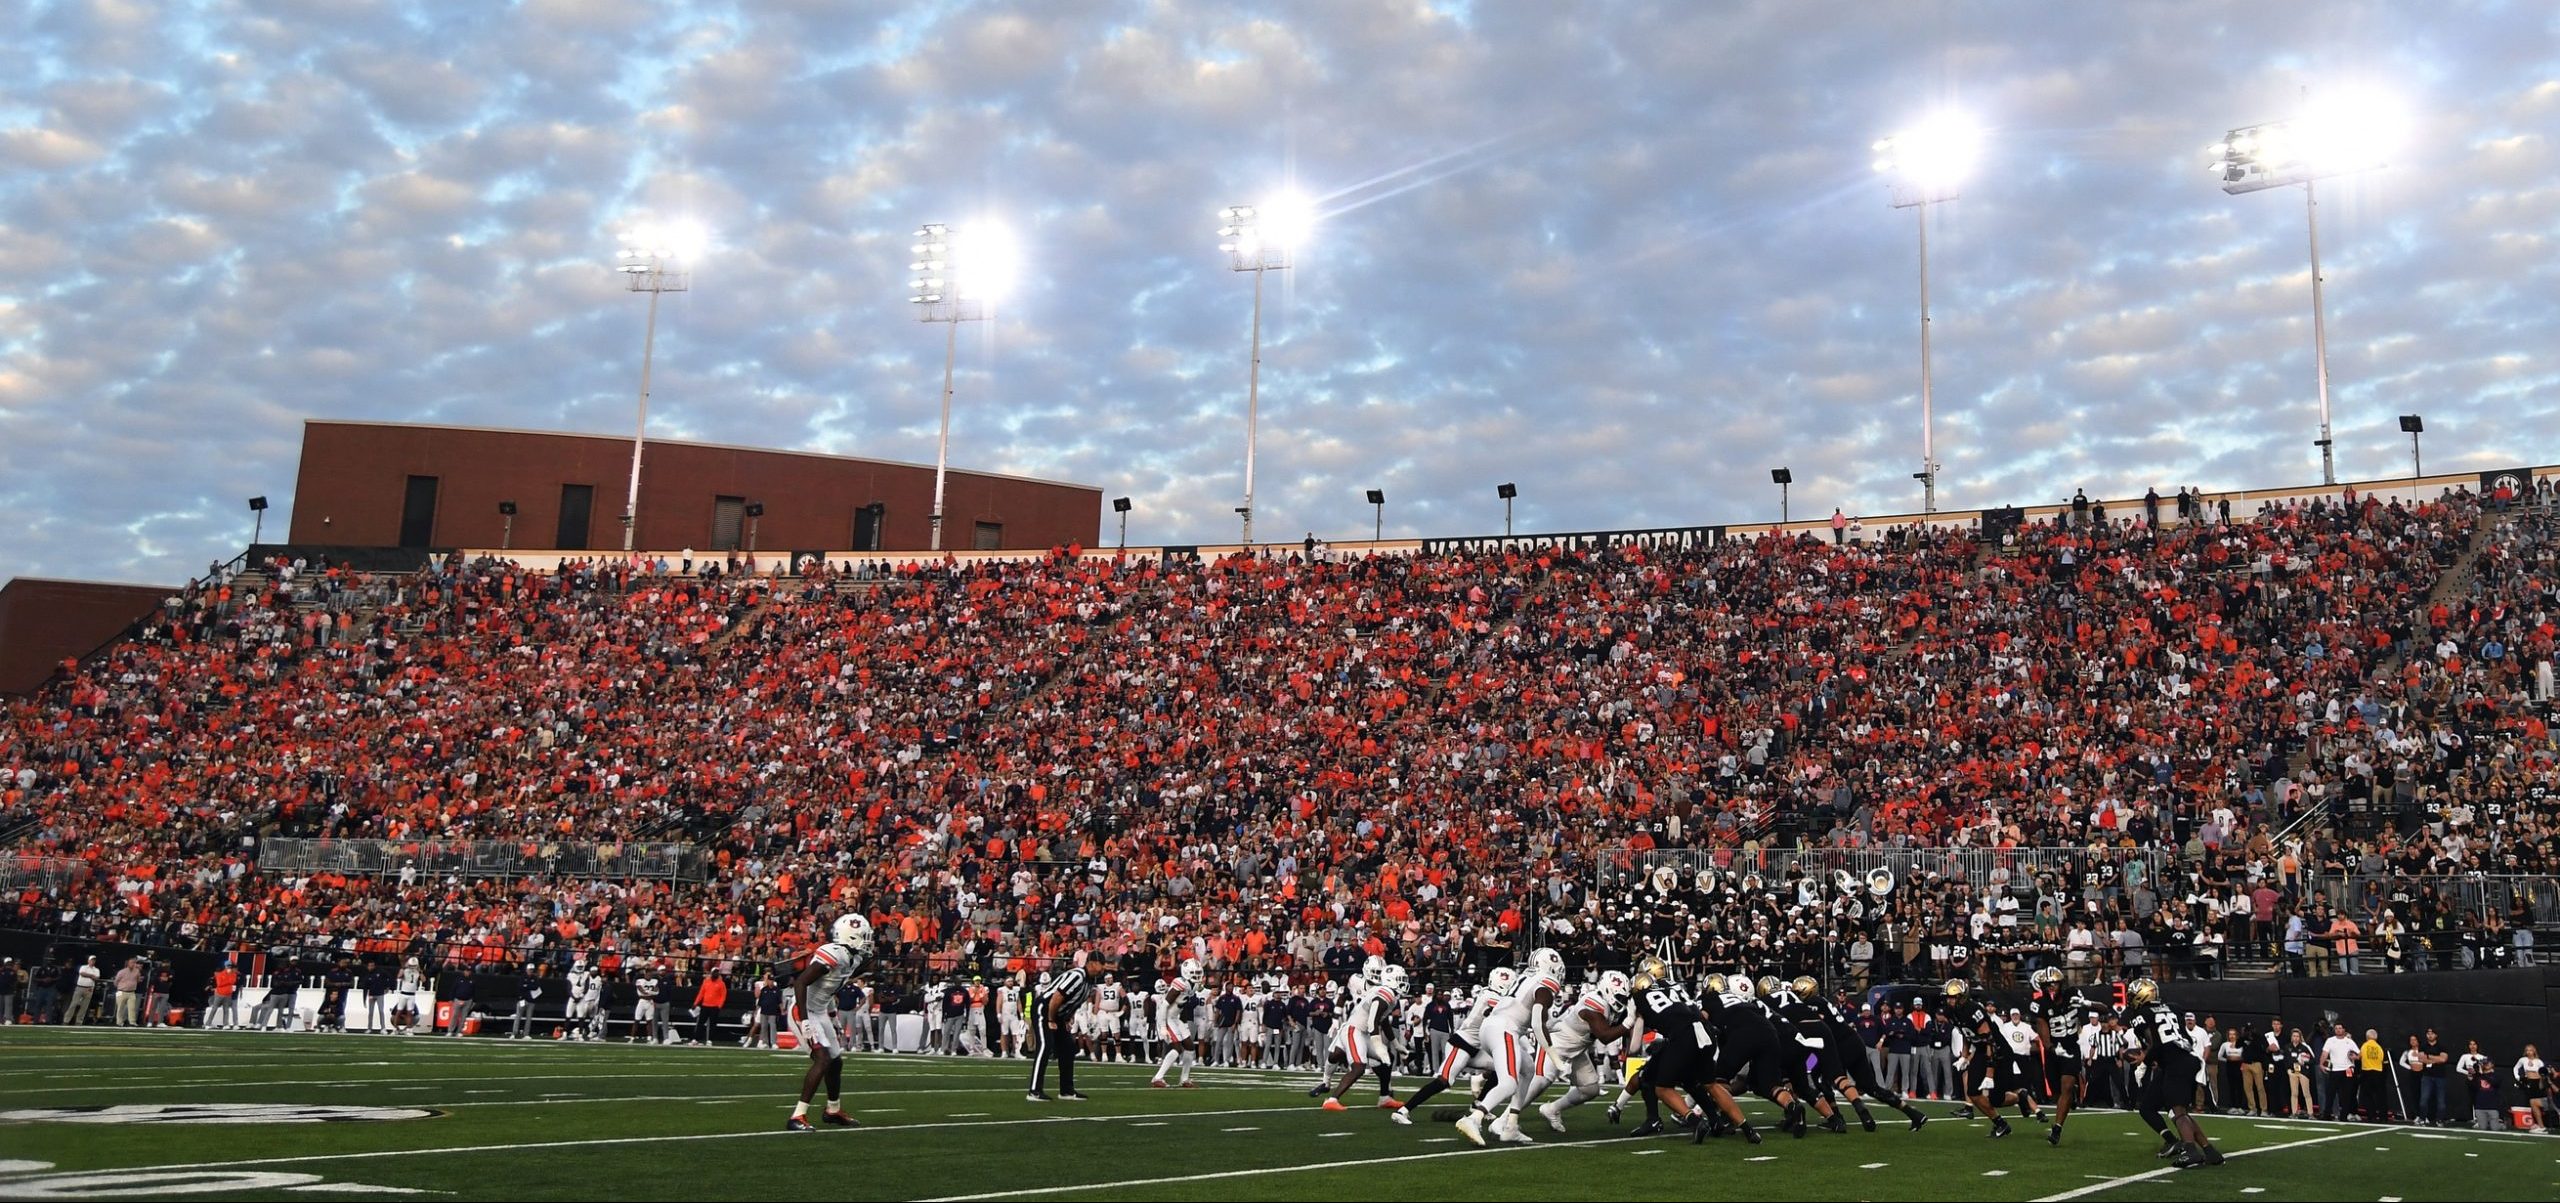 Vanderbilt's crowd for their homecoming game against Auburn.